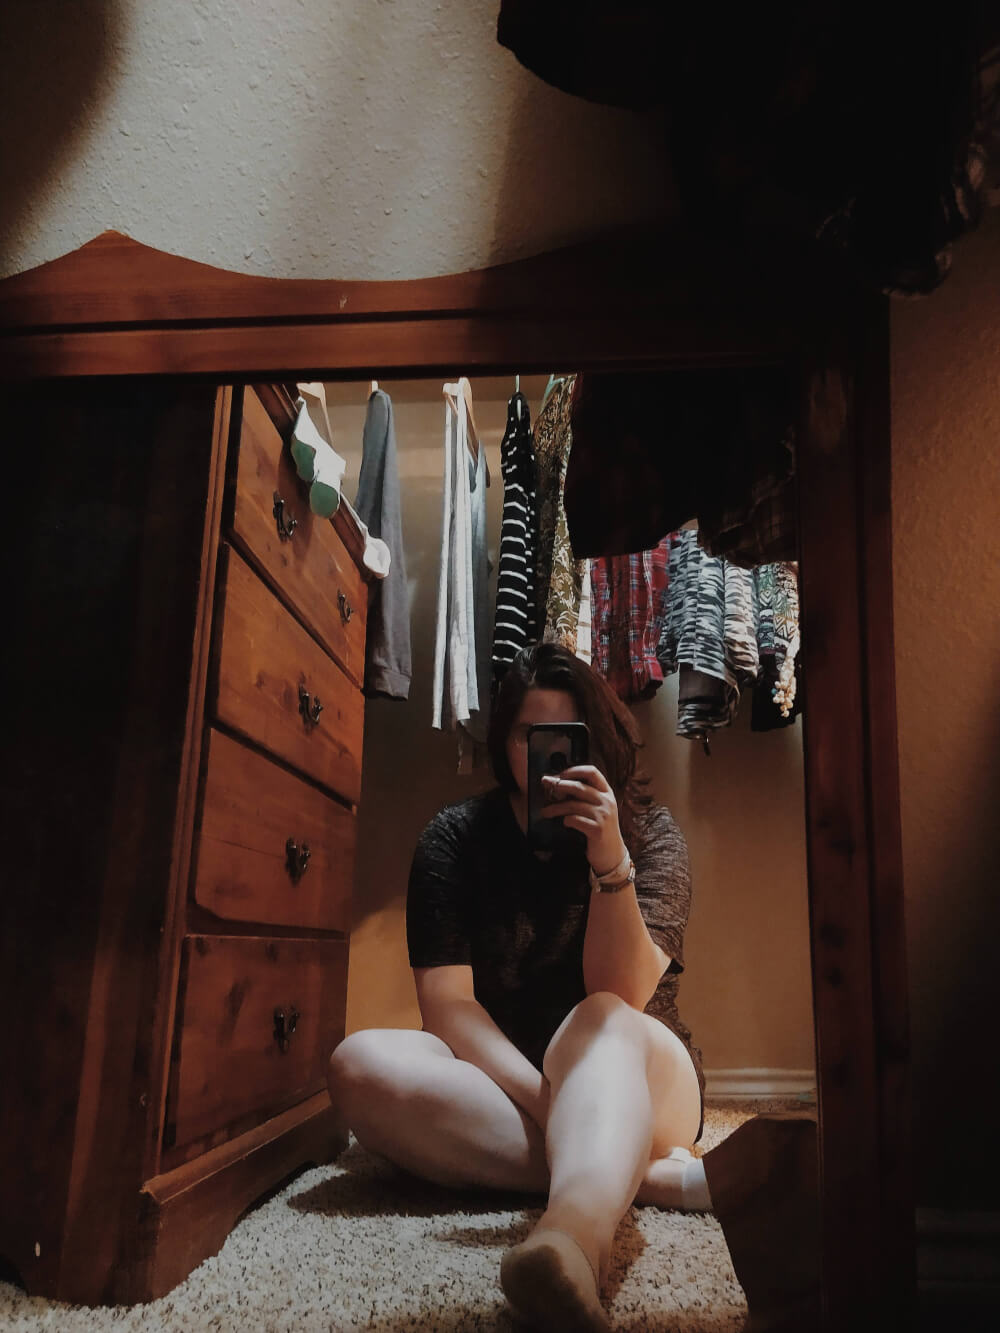 Faceless closet mirro selfie on the floor ft. dark vibes